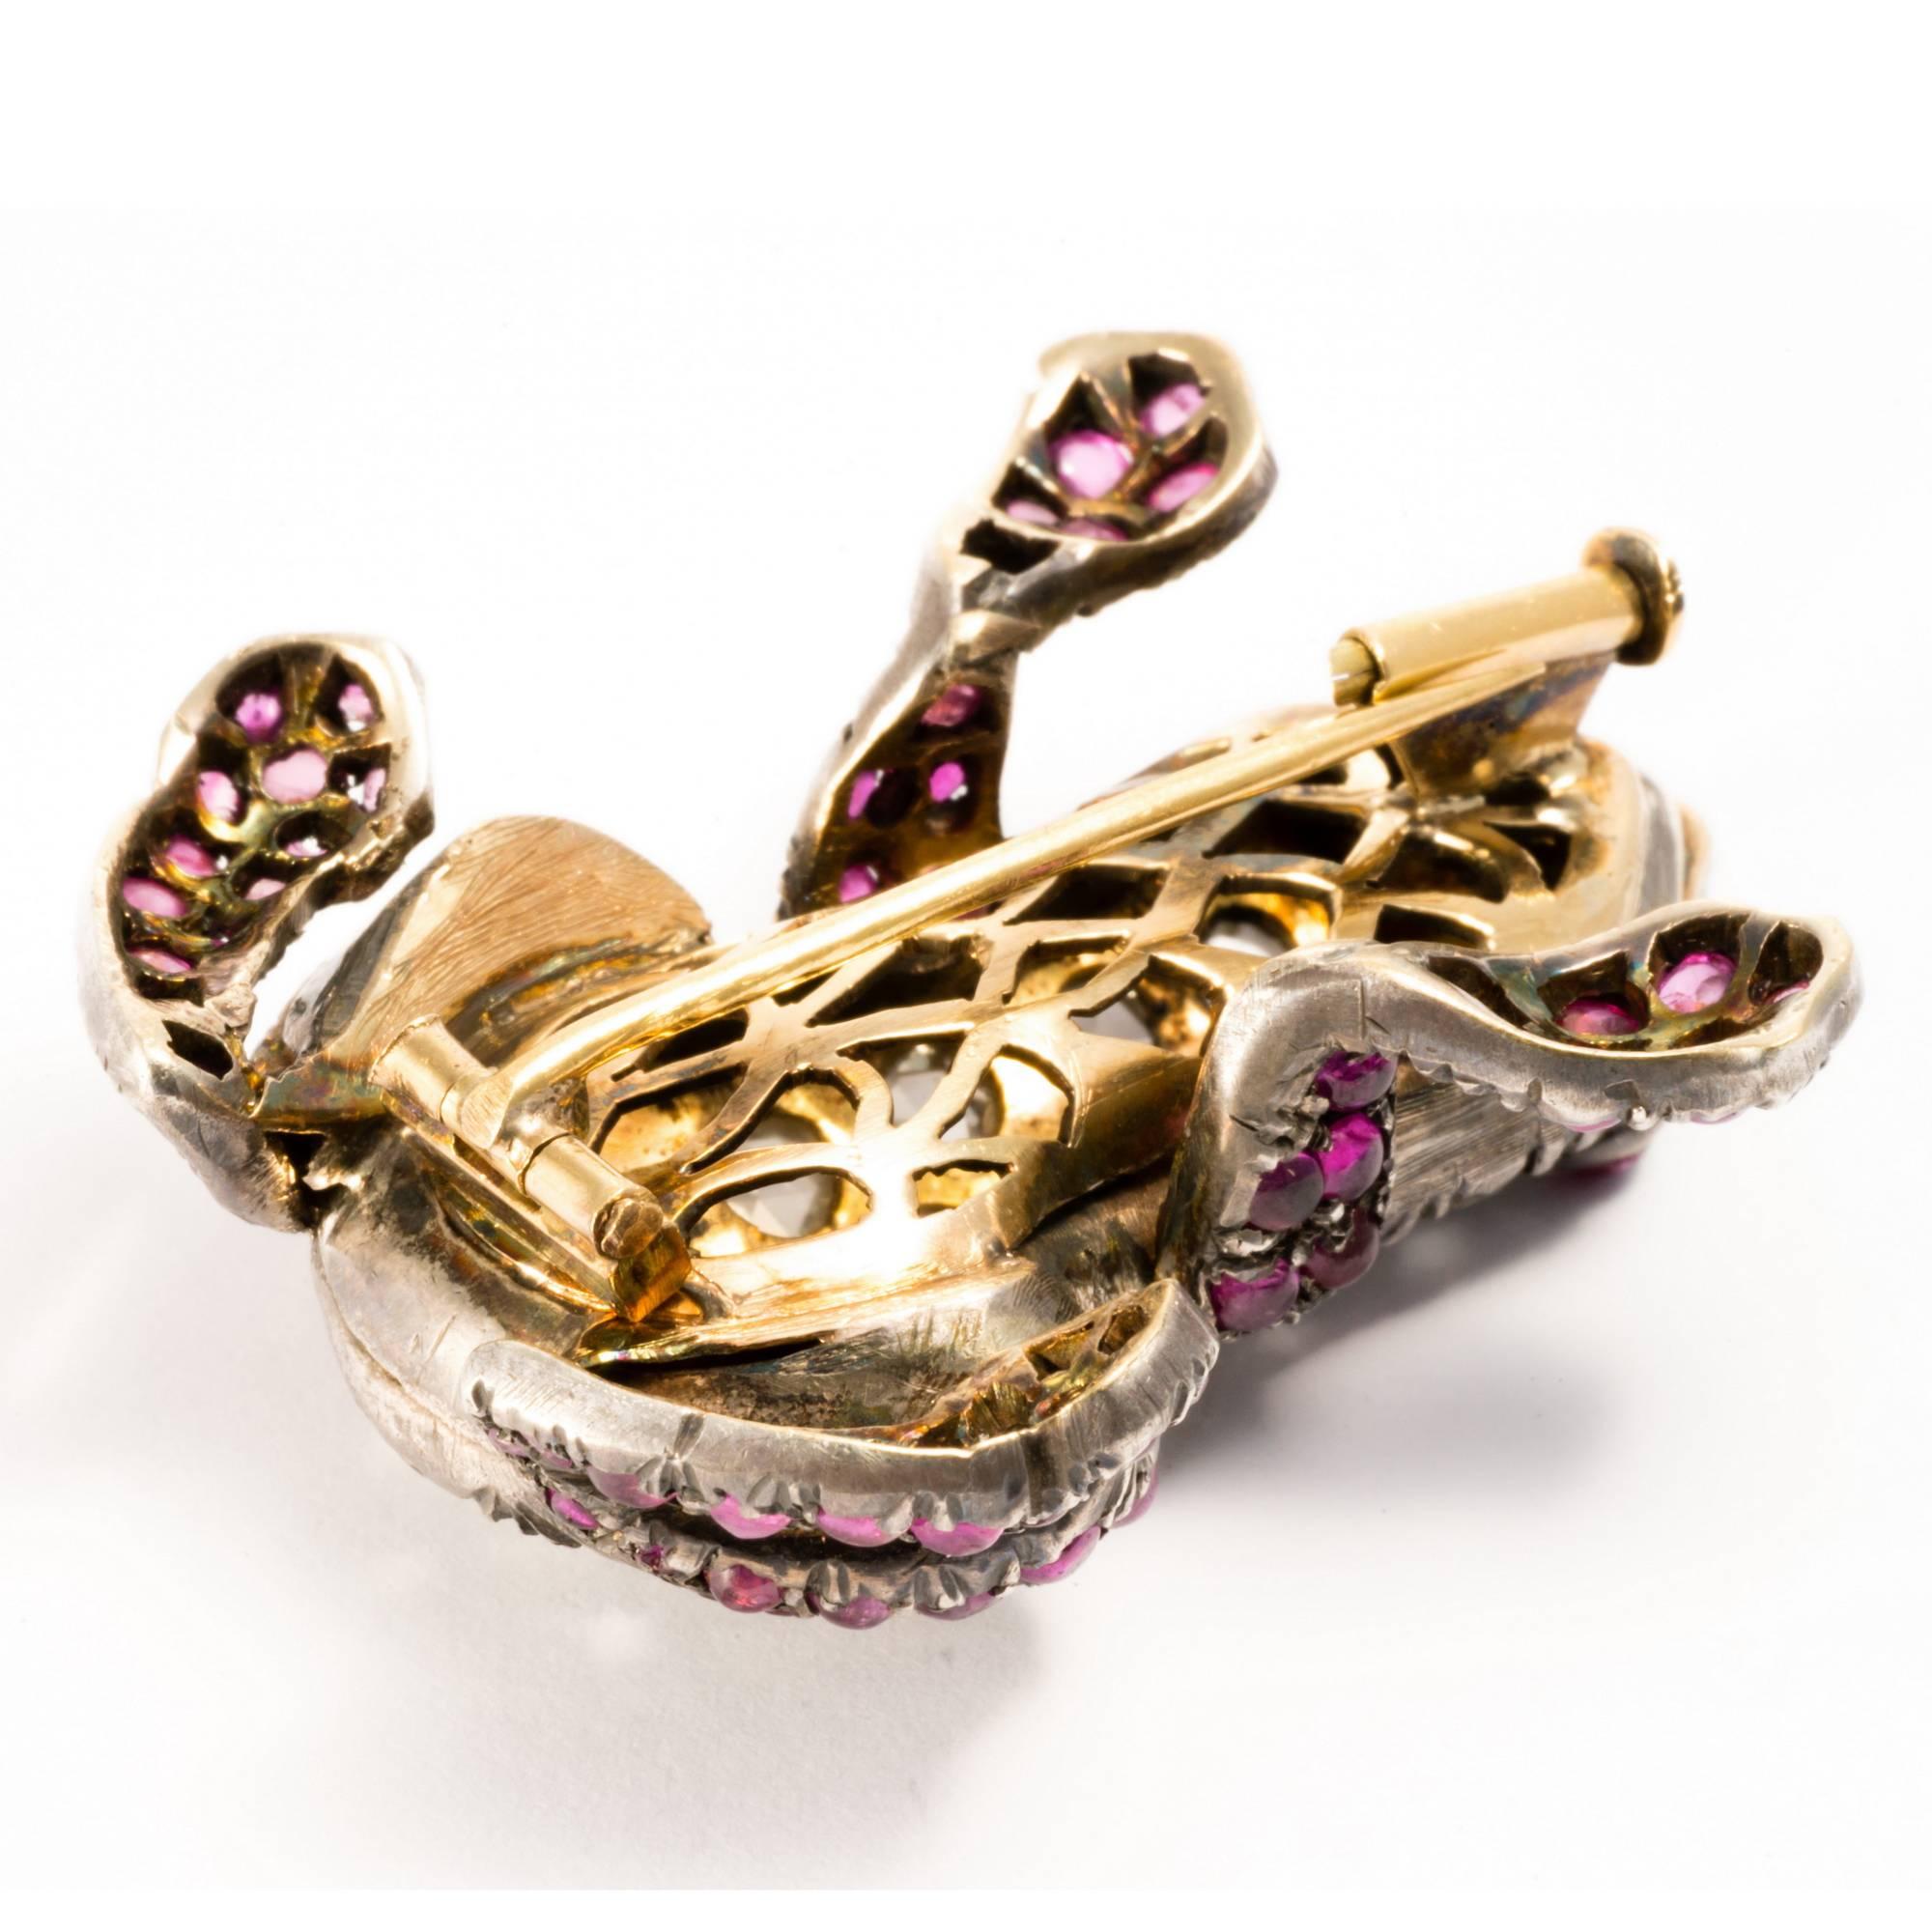 1880 Antique Symbol Rose Cut Diamonds and Rubies Frog Necklace Enhancer Brooch  3